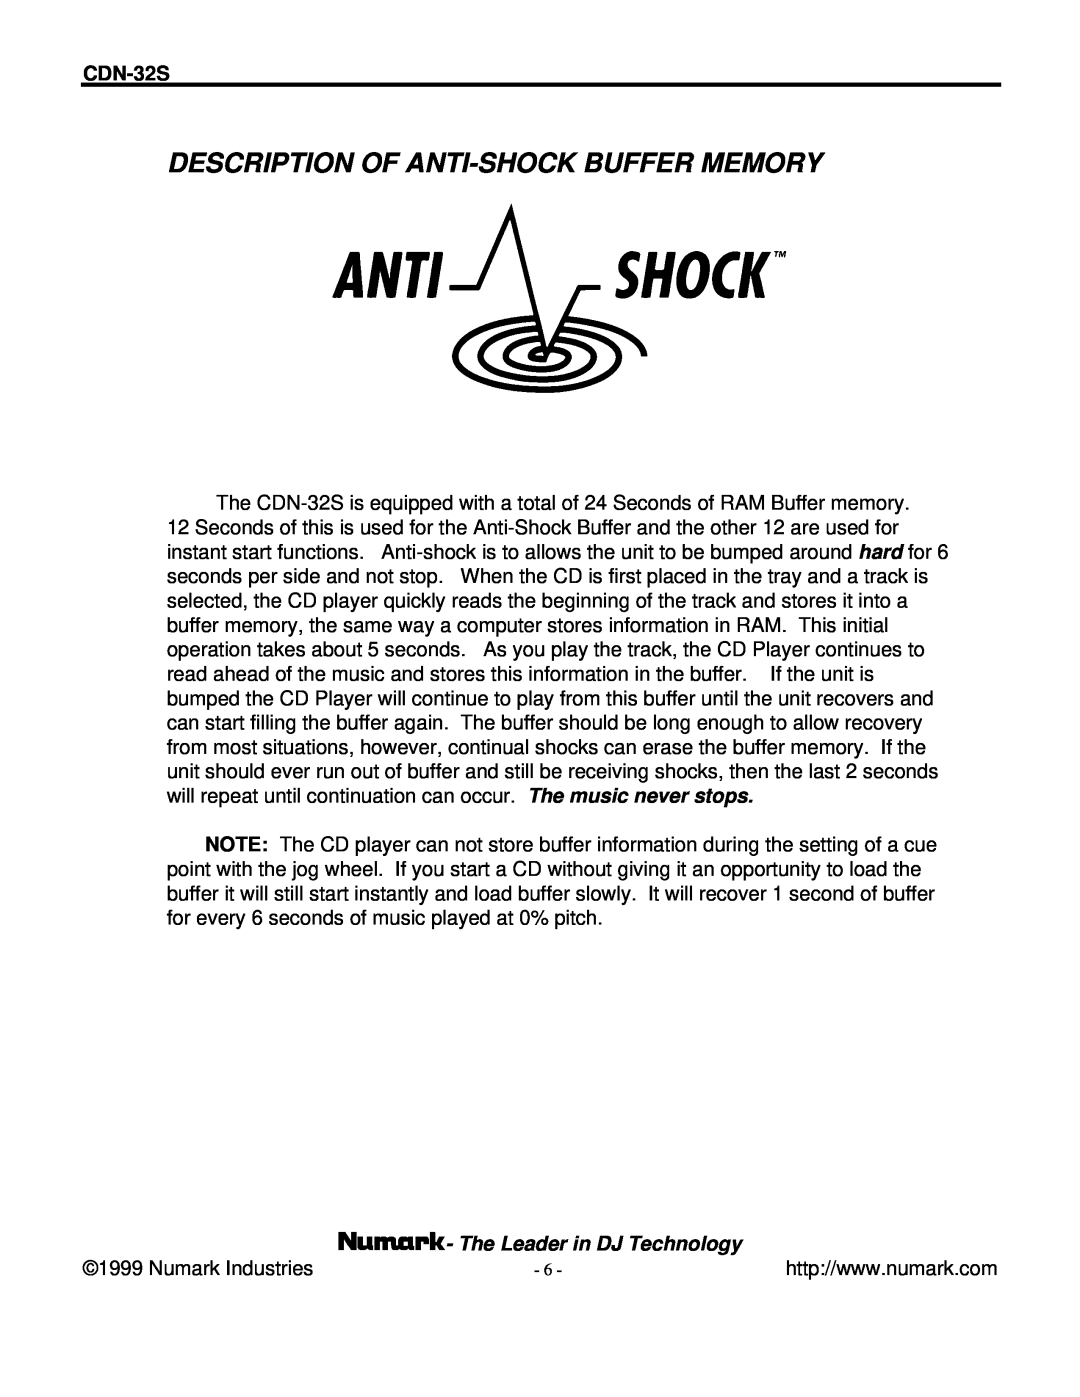 Numark Industries CDN-32S manual Description Of Anti-Shockbuffer Memory, The Leader in DJ Technology 